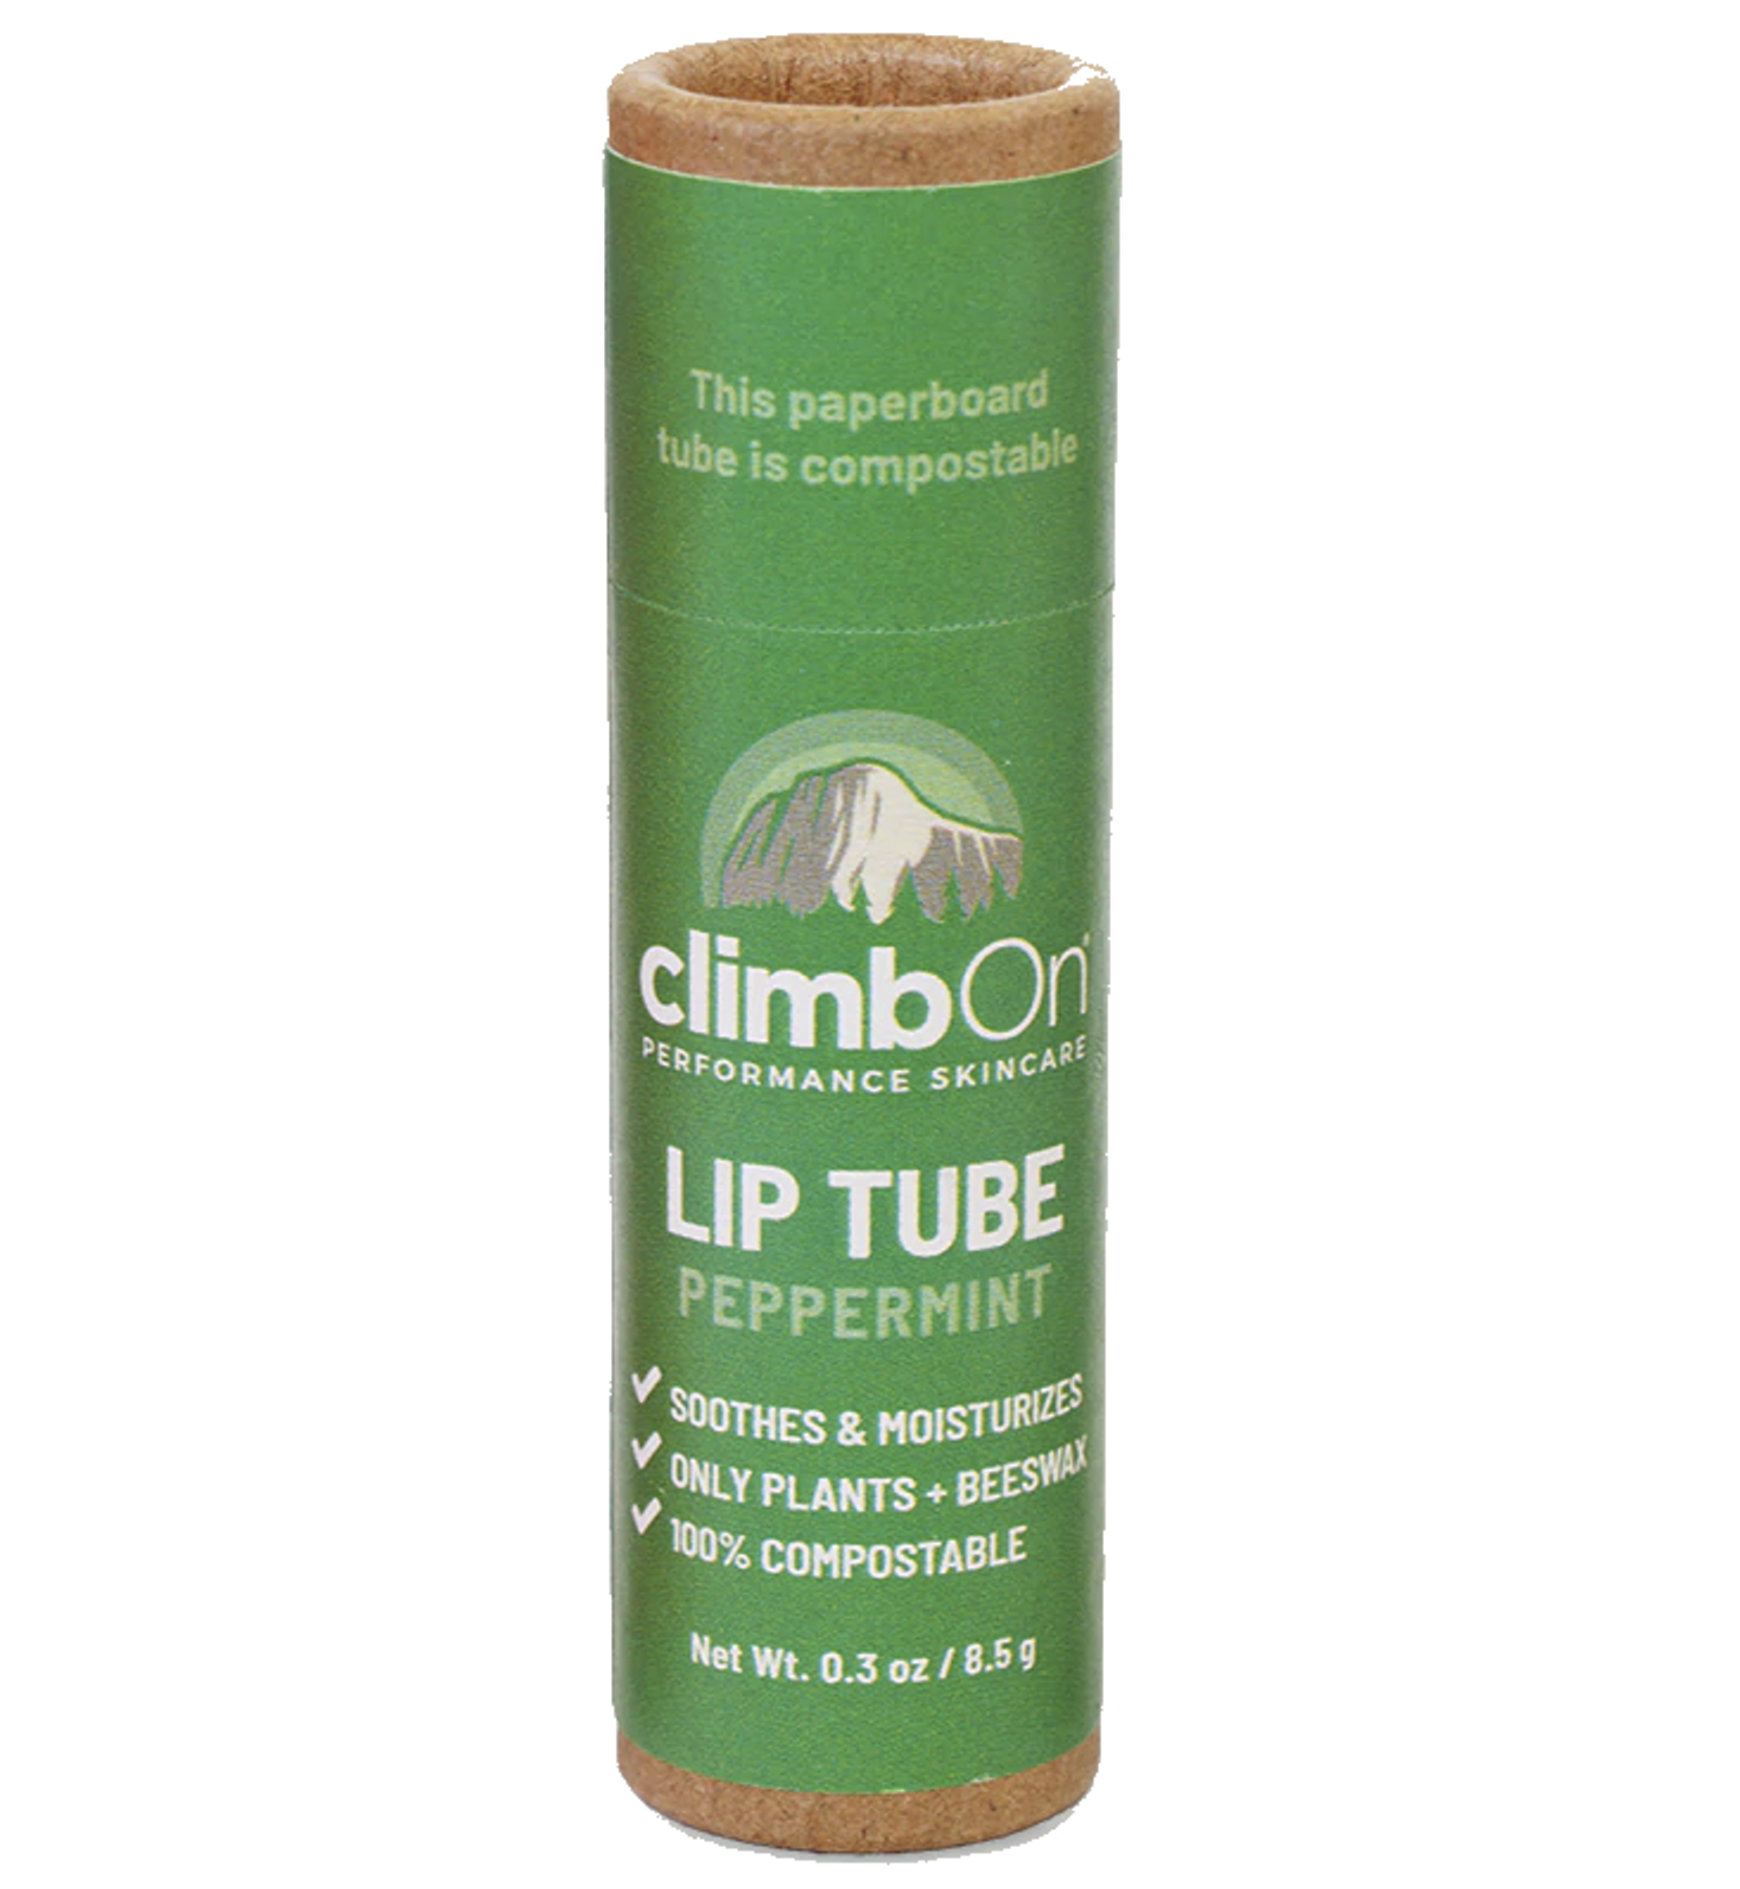 Climb On Lip tube Peppermint 0.3 oz Lippenbalsam